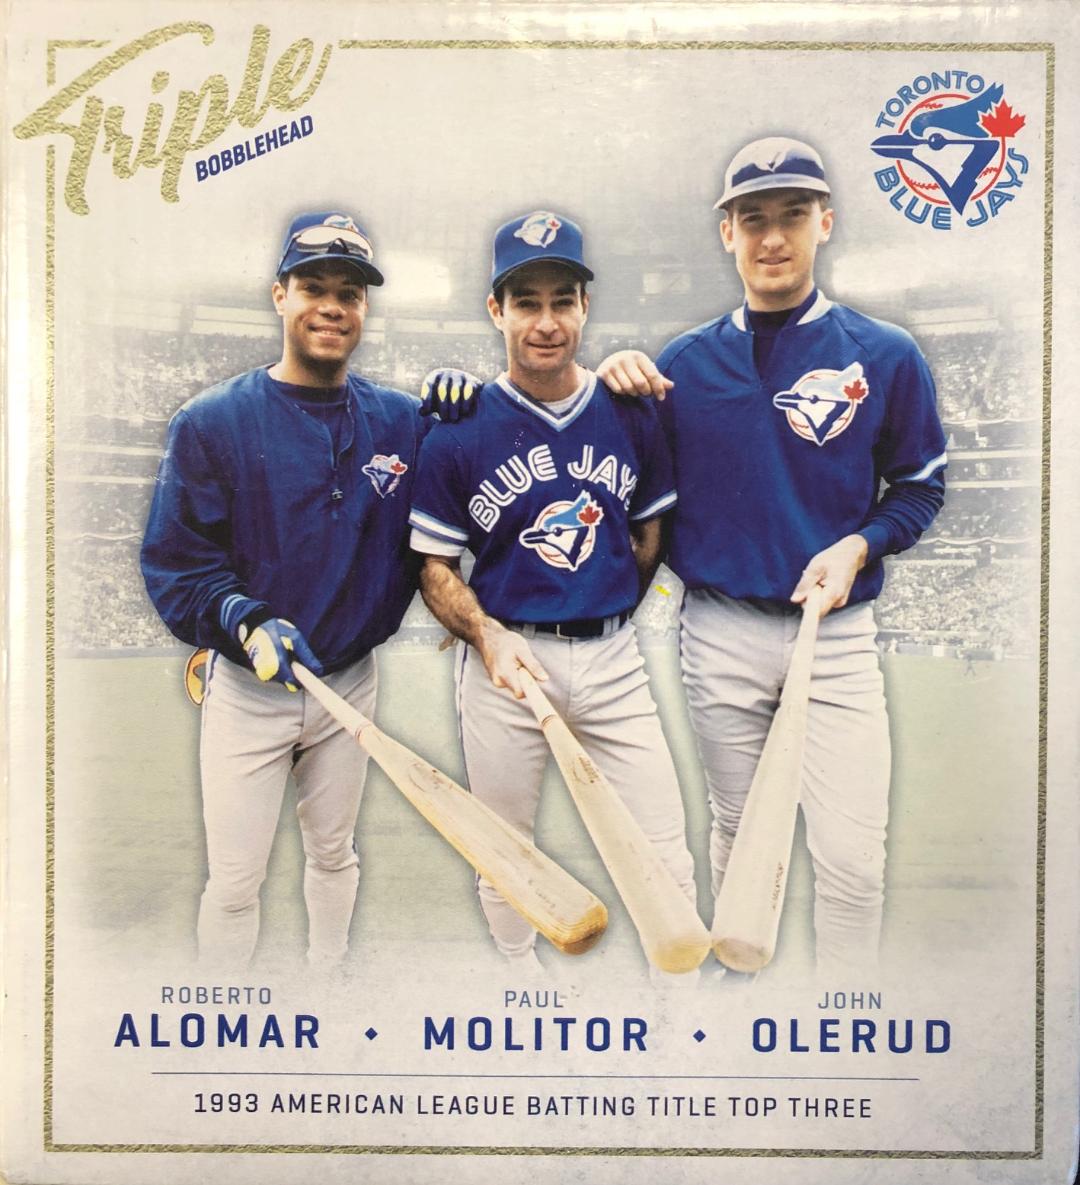 Alomar, Molitor, Olerud 1993 AL Batting Title Top 3 Triple